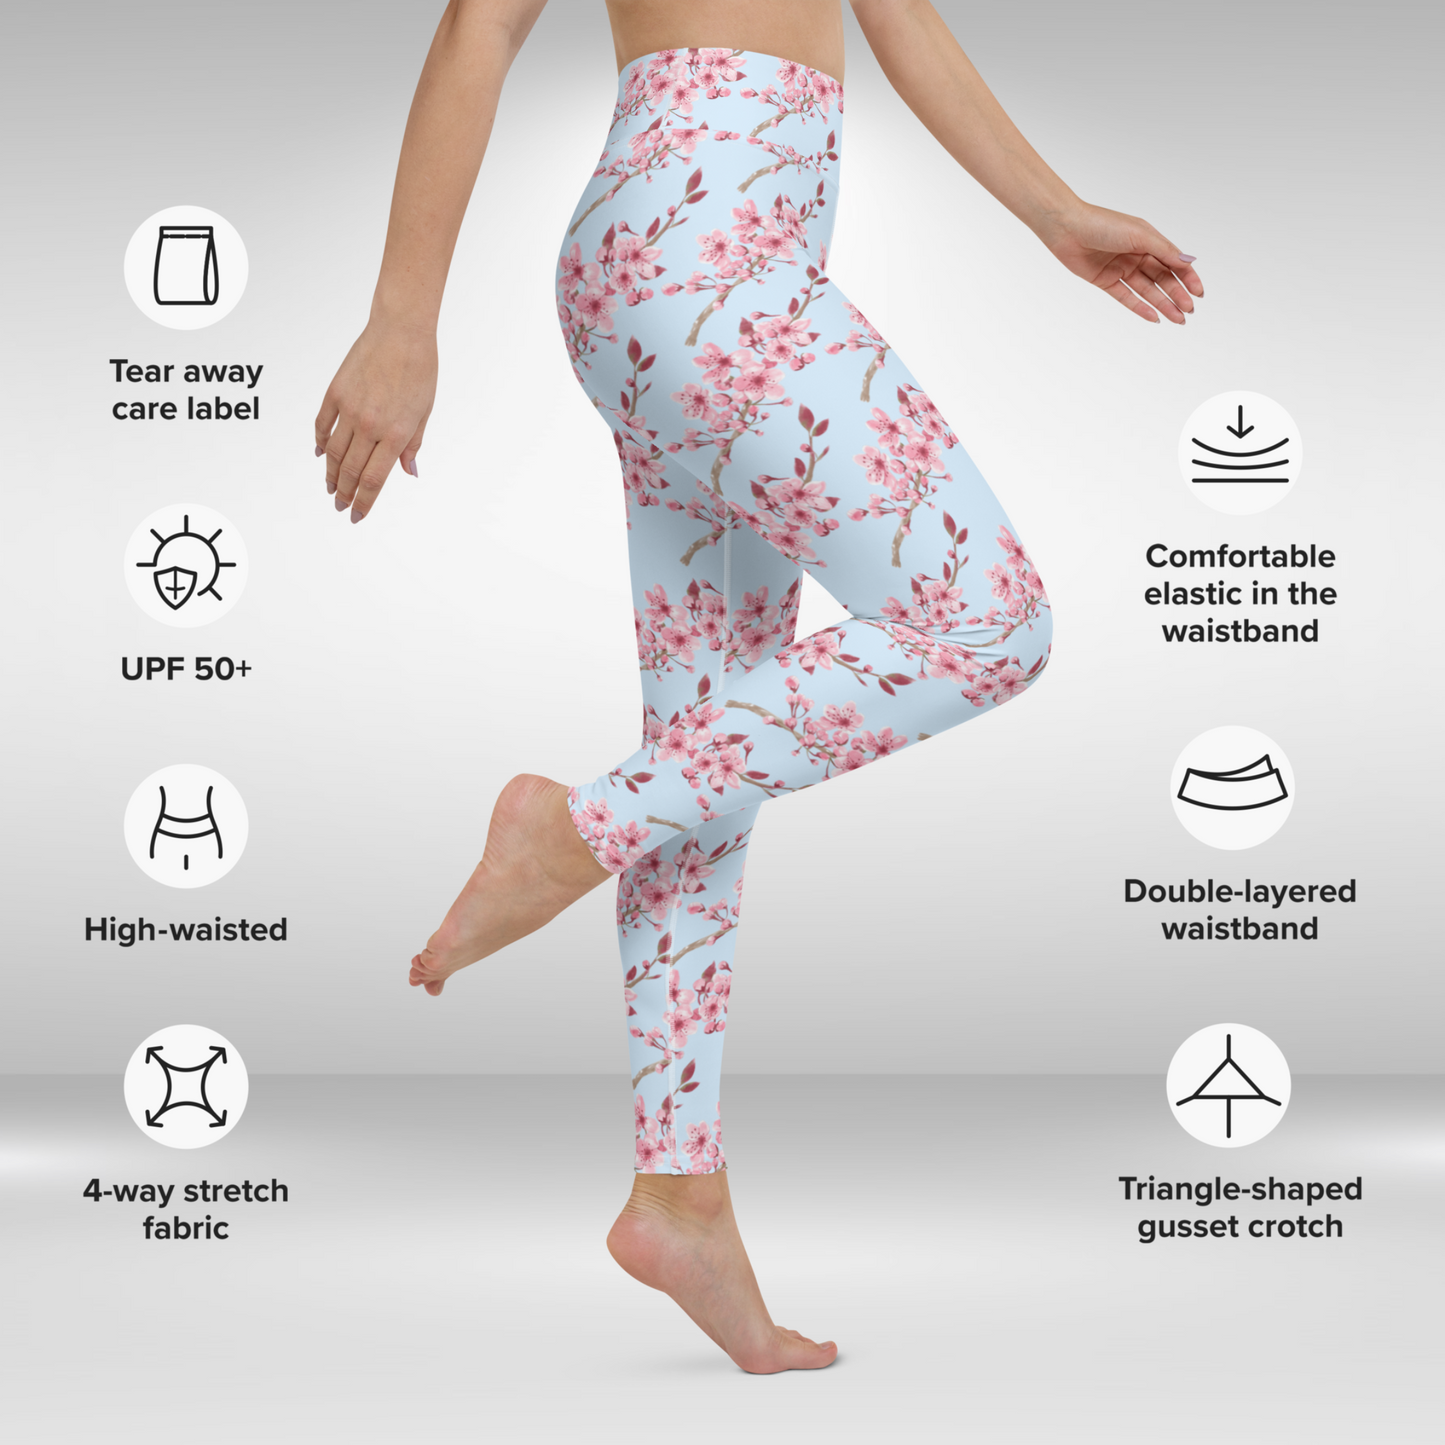 Women Yoga Legging - Cherry Blossom Print